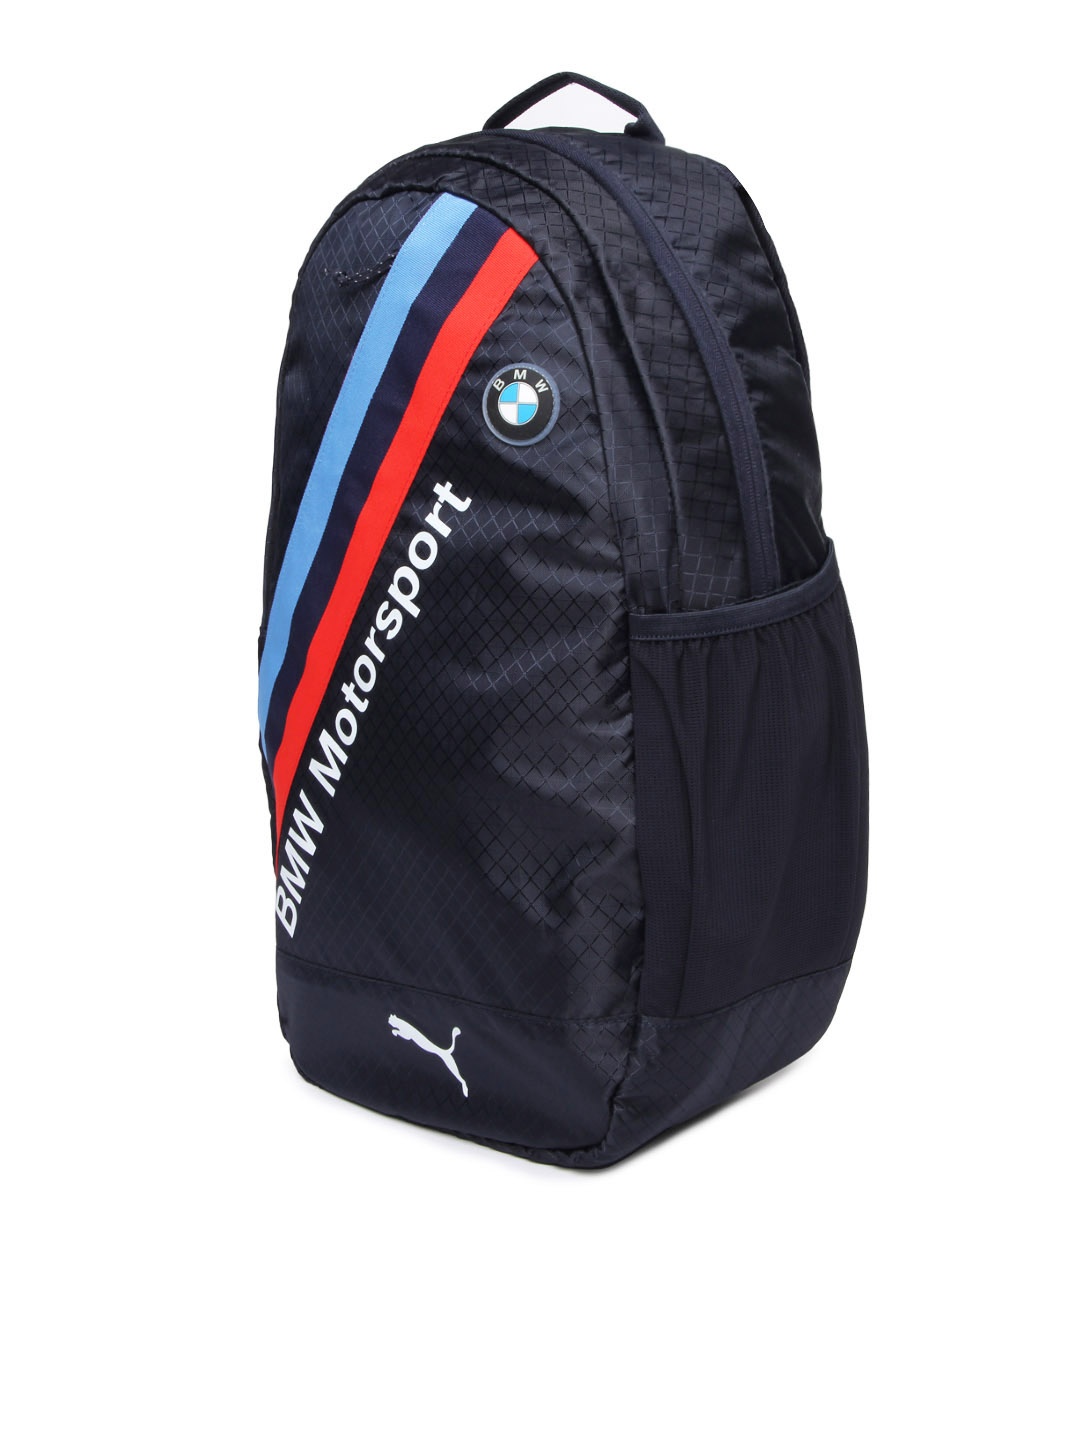 puma bmw backpack for sale